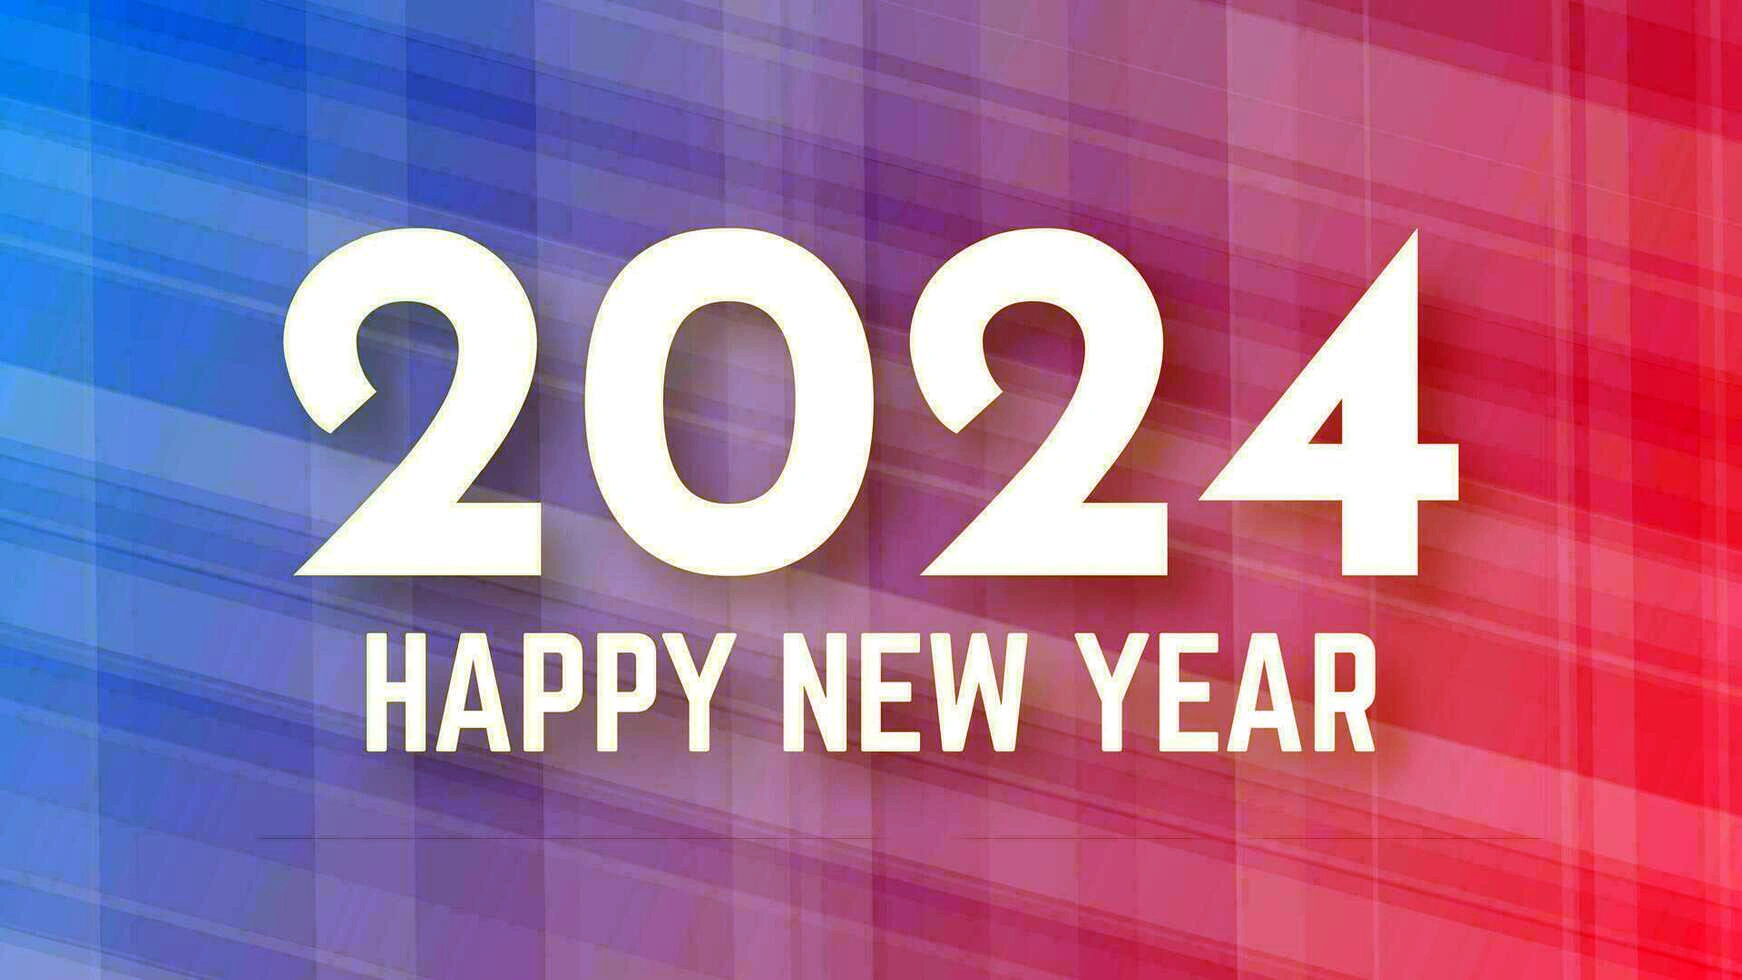 Happy New Year Wallpaper 2023 1024x683.jpg